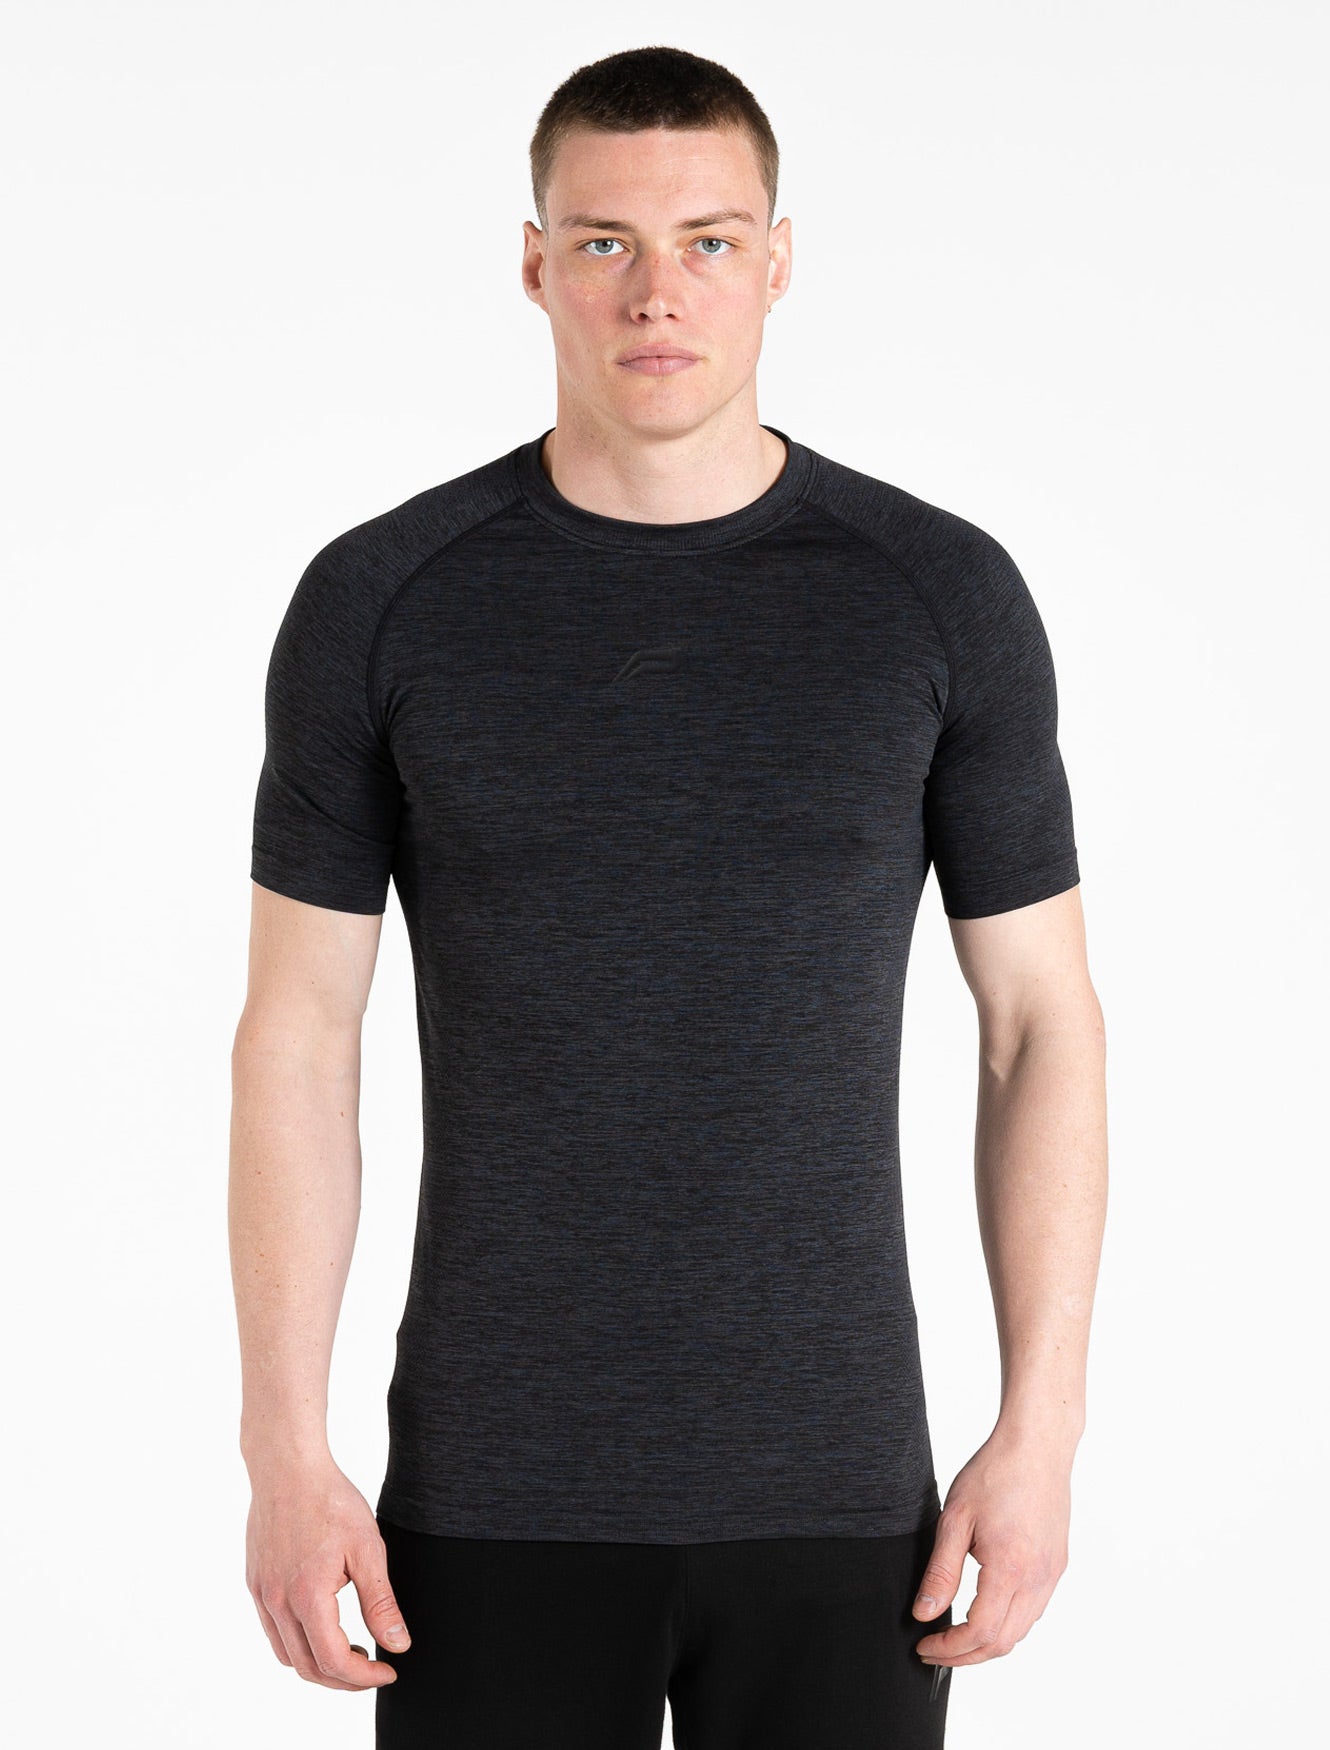 Intensity Seamless T-shirt / Black Marl Pursue Fitness 1